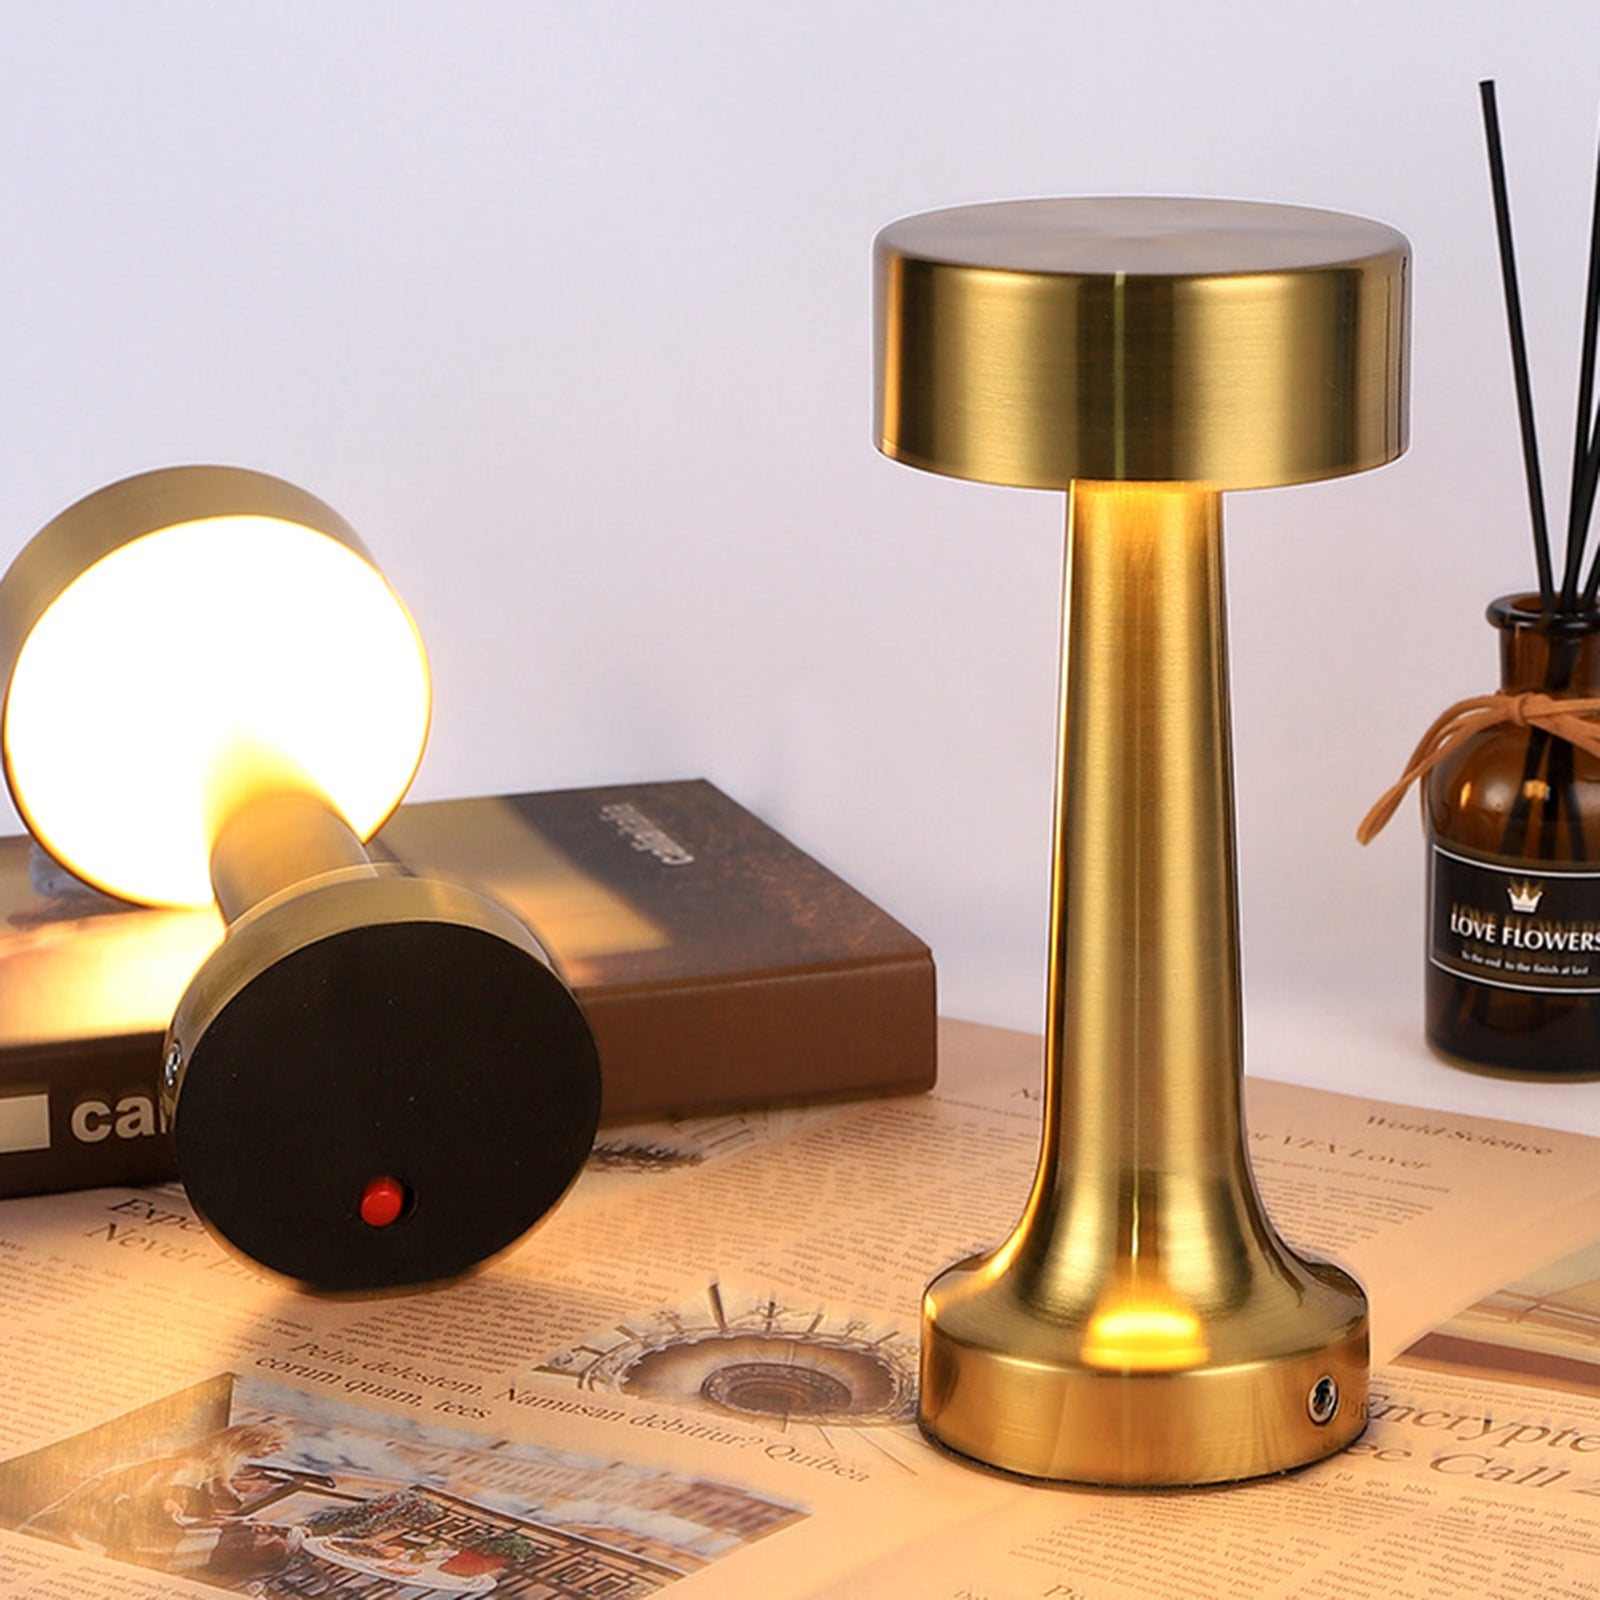 Dumbbells Modern Table Lamp, Metal Bedside Lamp, USB Charging Bedside Lamp, with 3 Brightness Levels for Bedroom, Restaurant Reading Bar Coffee Shop